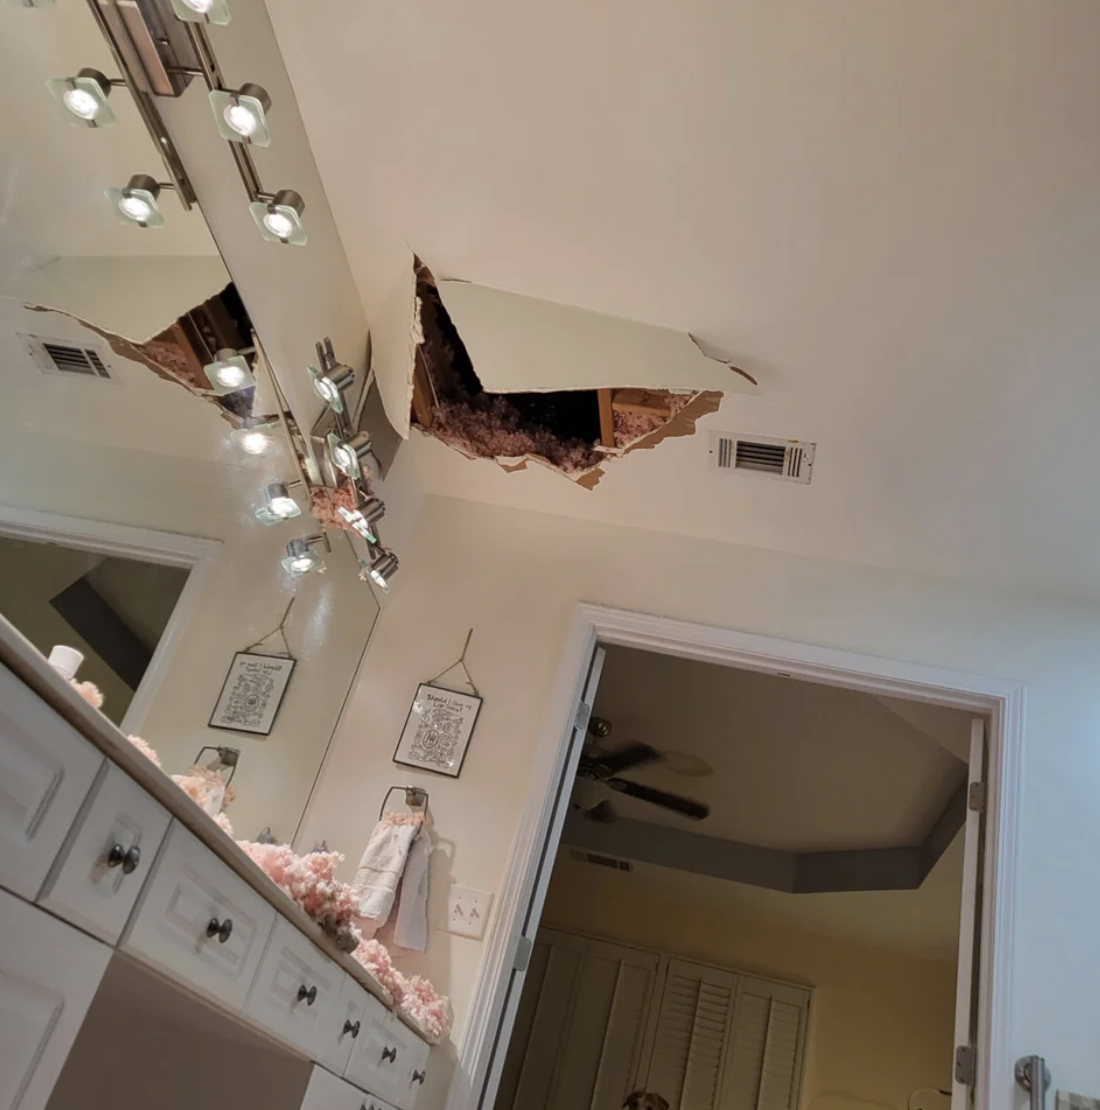 huge hole in the bathroom ceiling